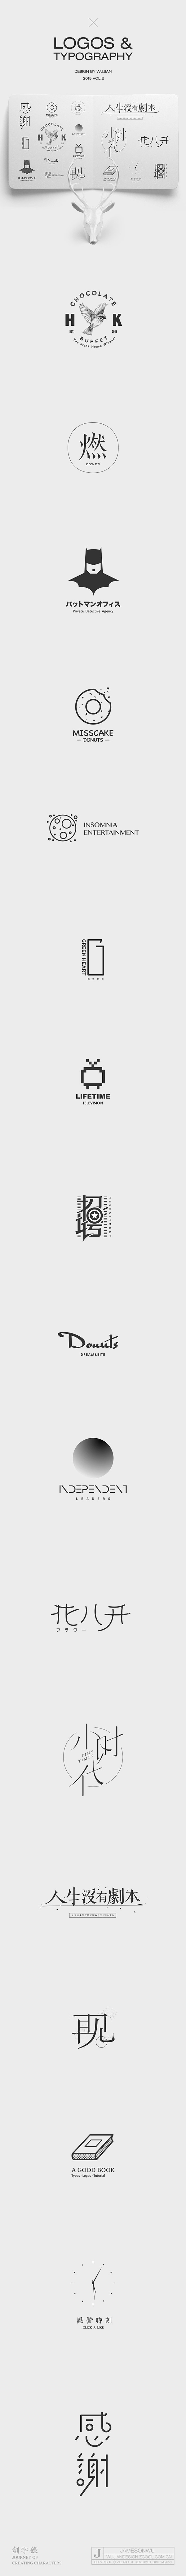 logotypes 2015 vol.2